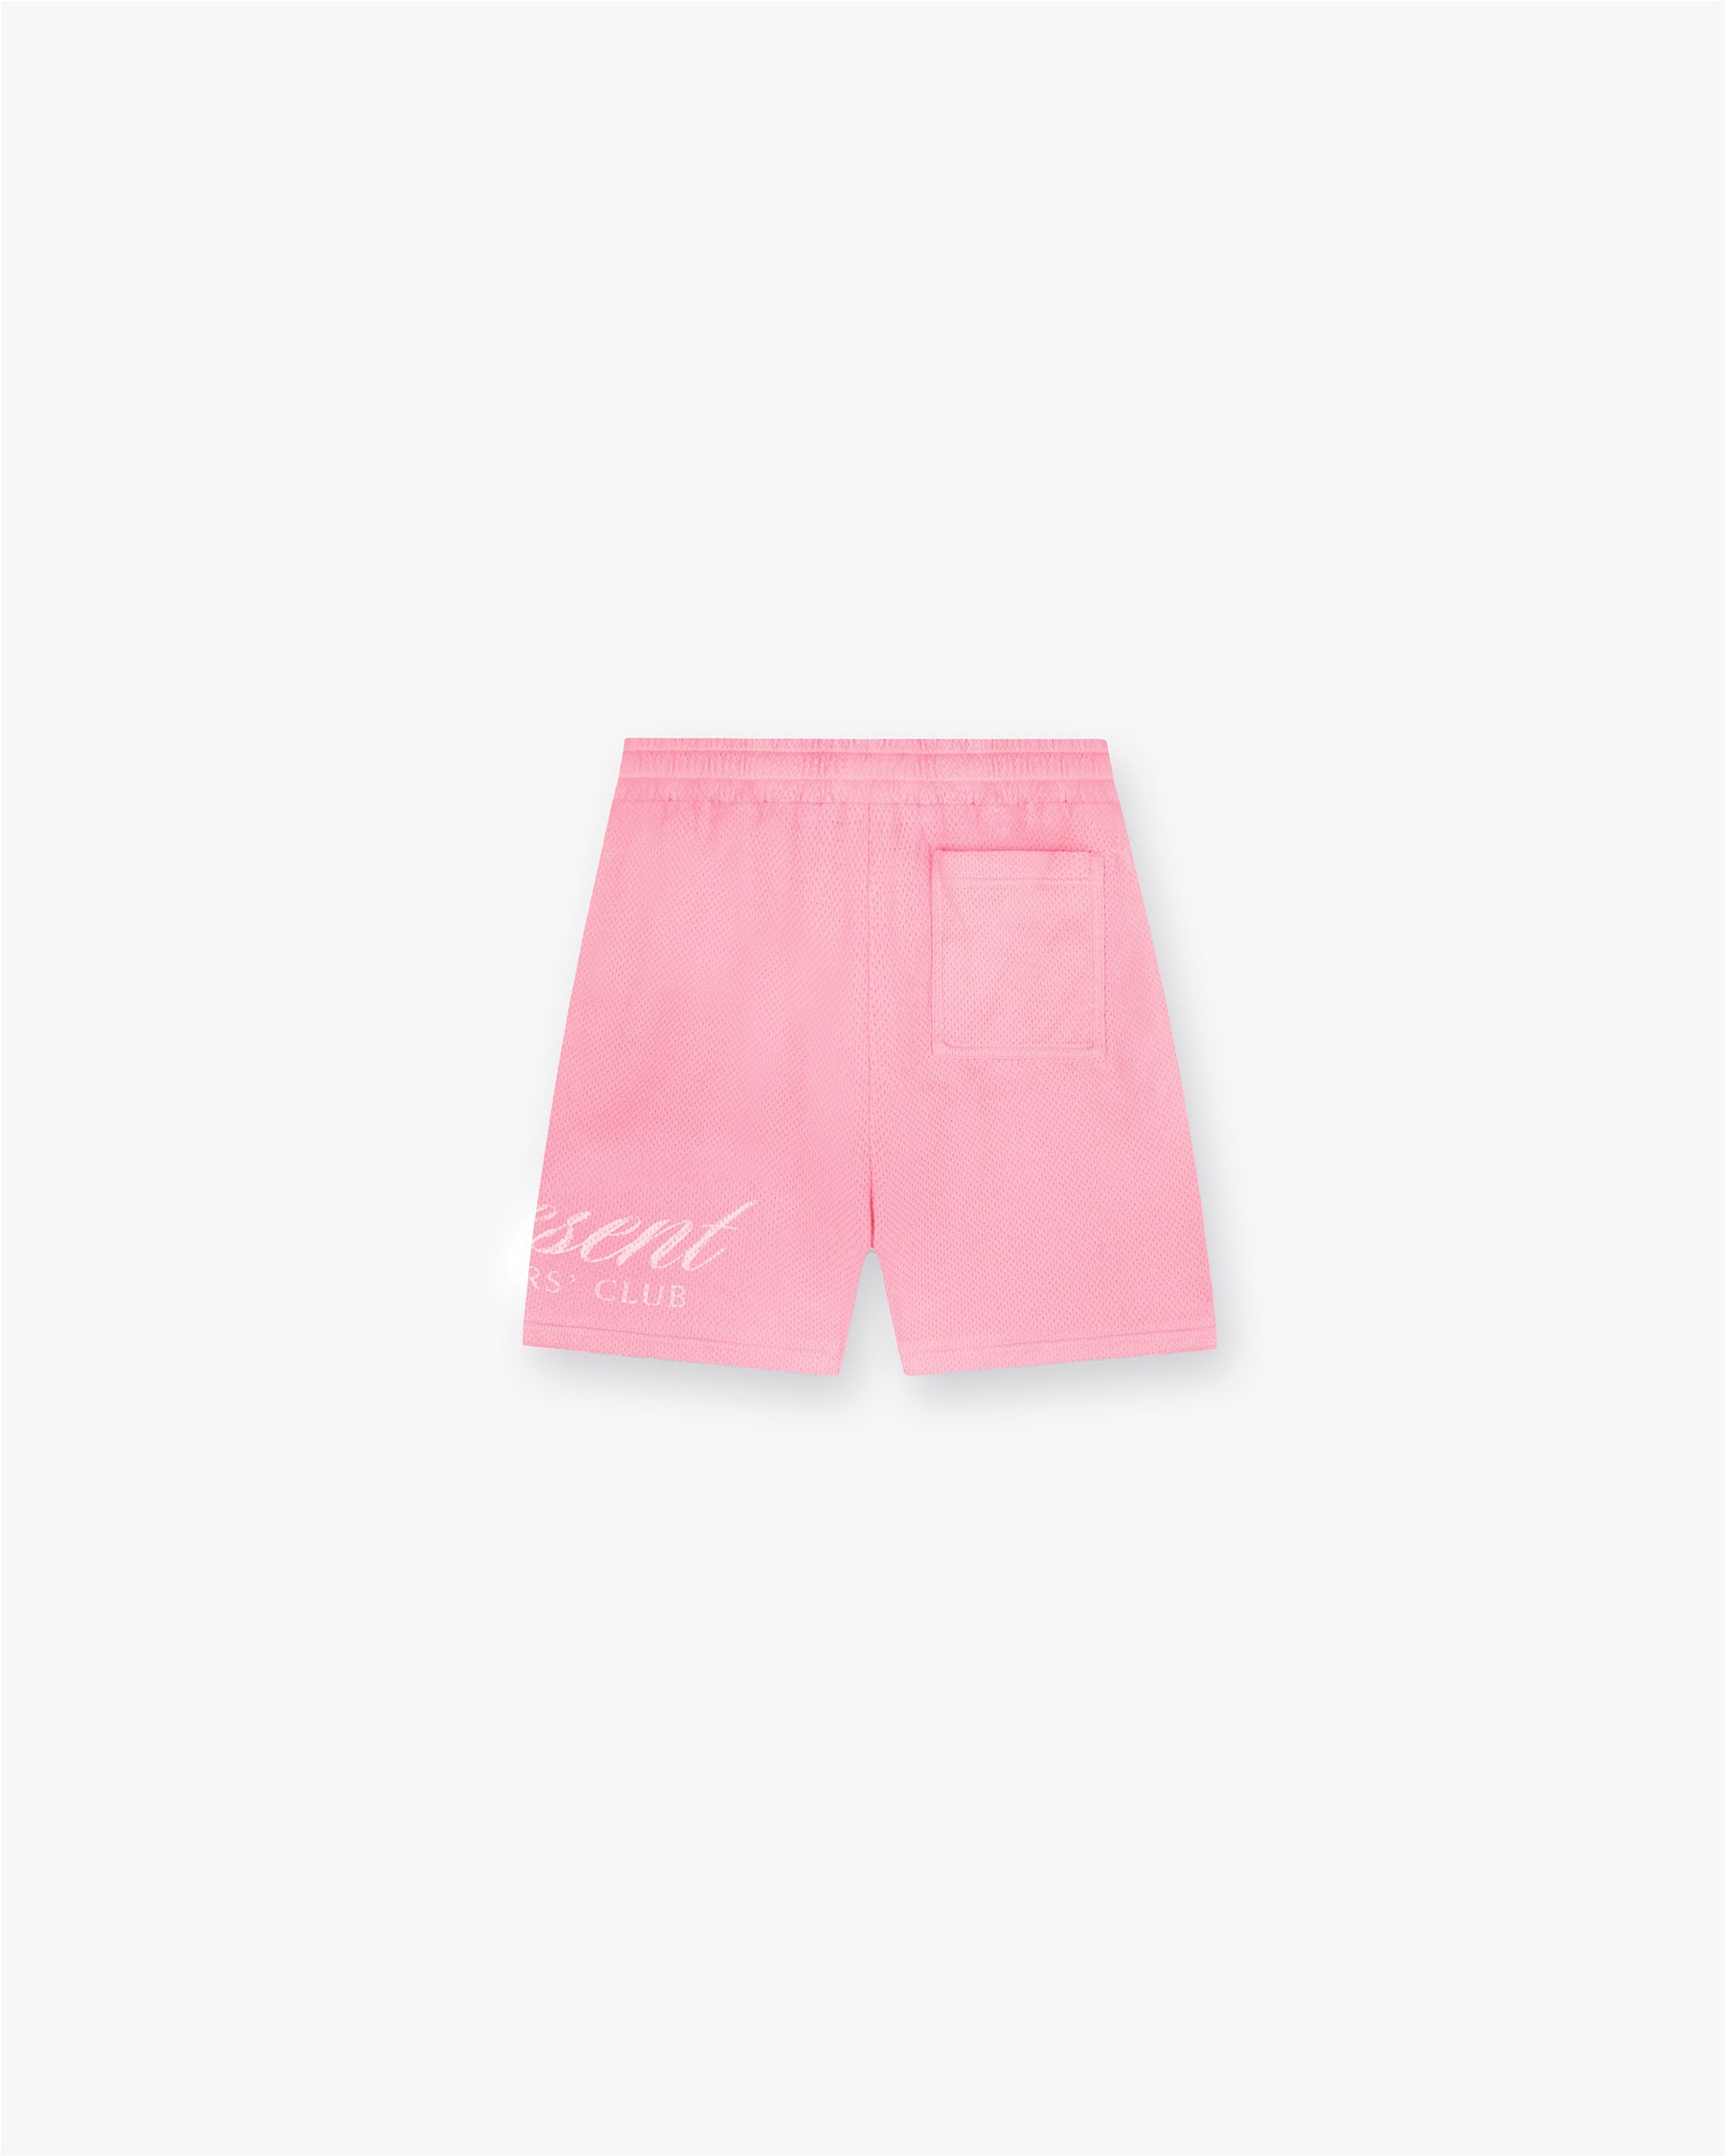 Represent Owners Club Script Mesh Shorts - Pink